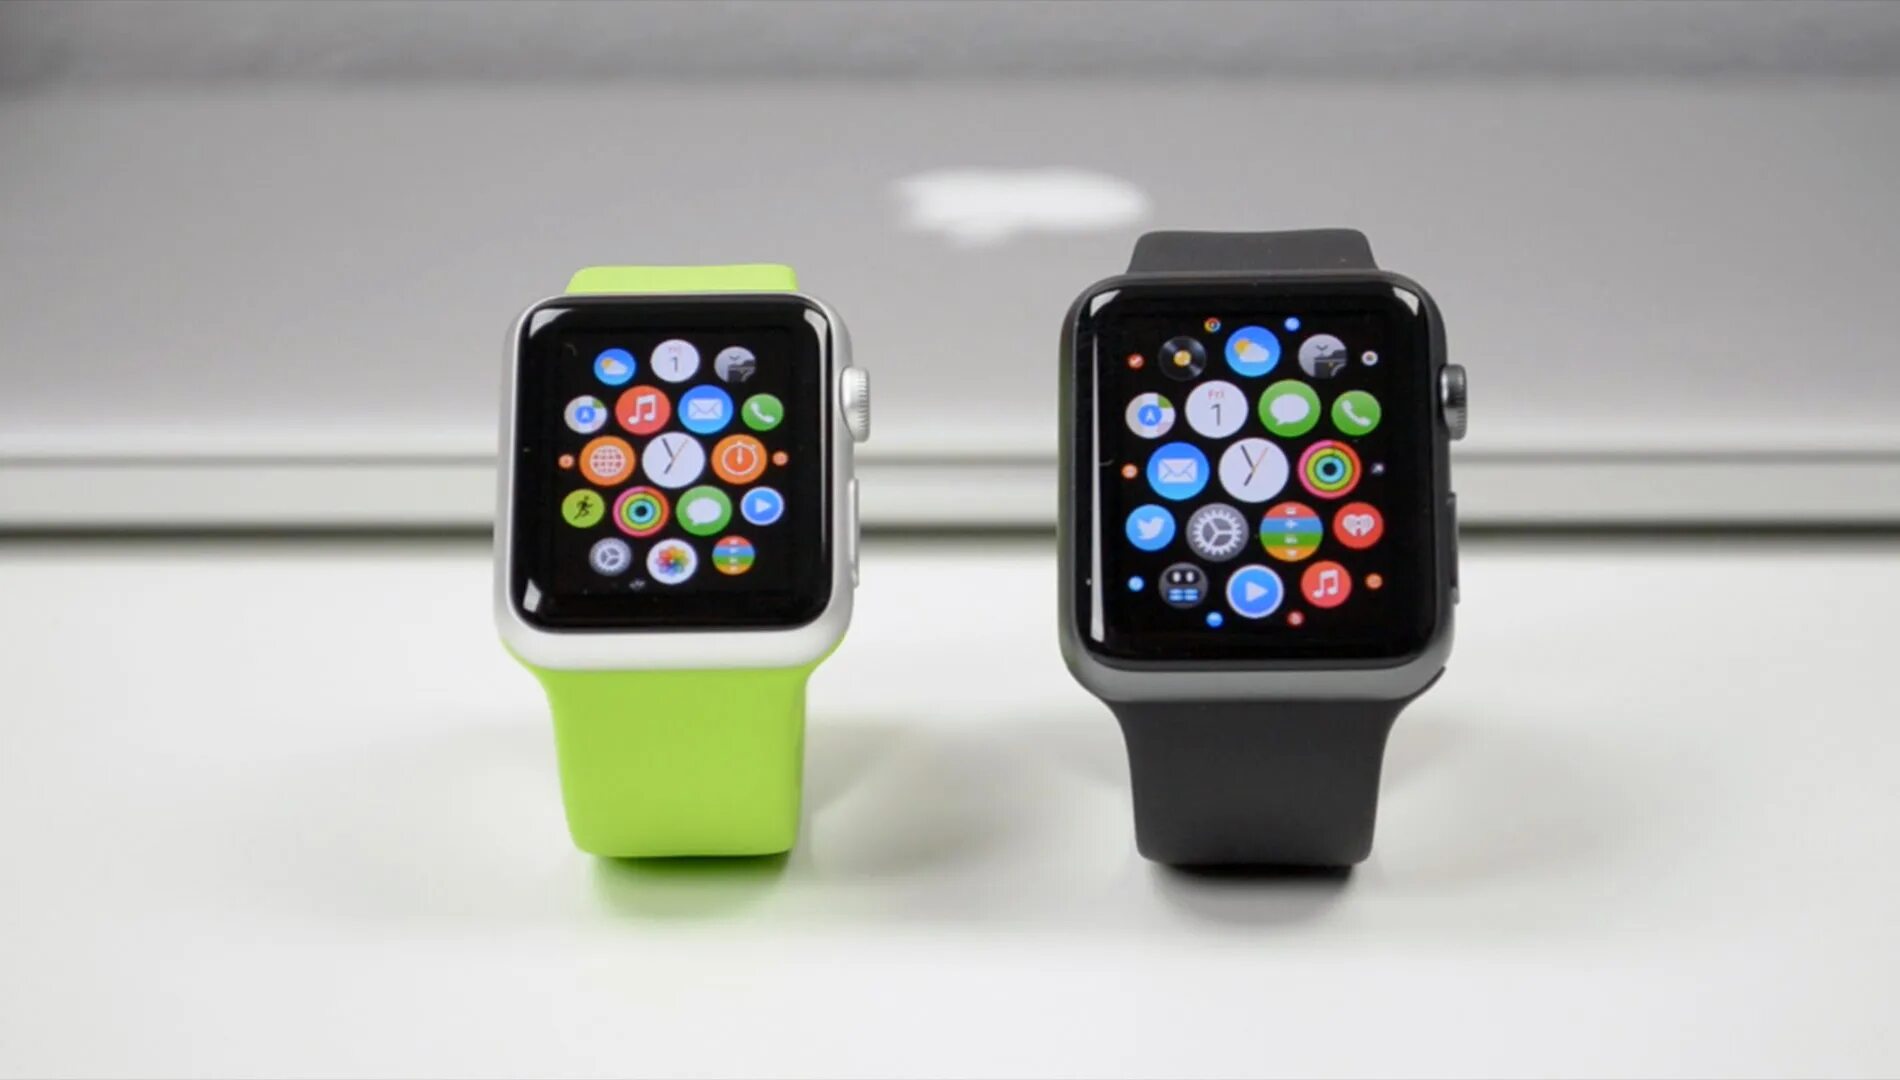 Часы эпл вотч 3 38 мм. Apple watch 3 42 mm. Apple watch 38 vs 42 mm. Apple watch Series 3 38mm.